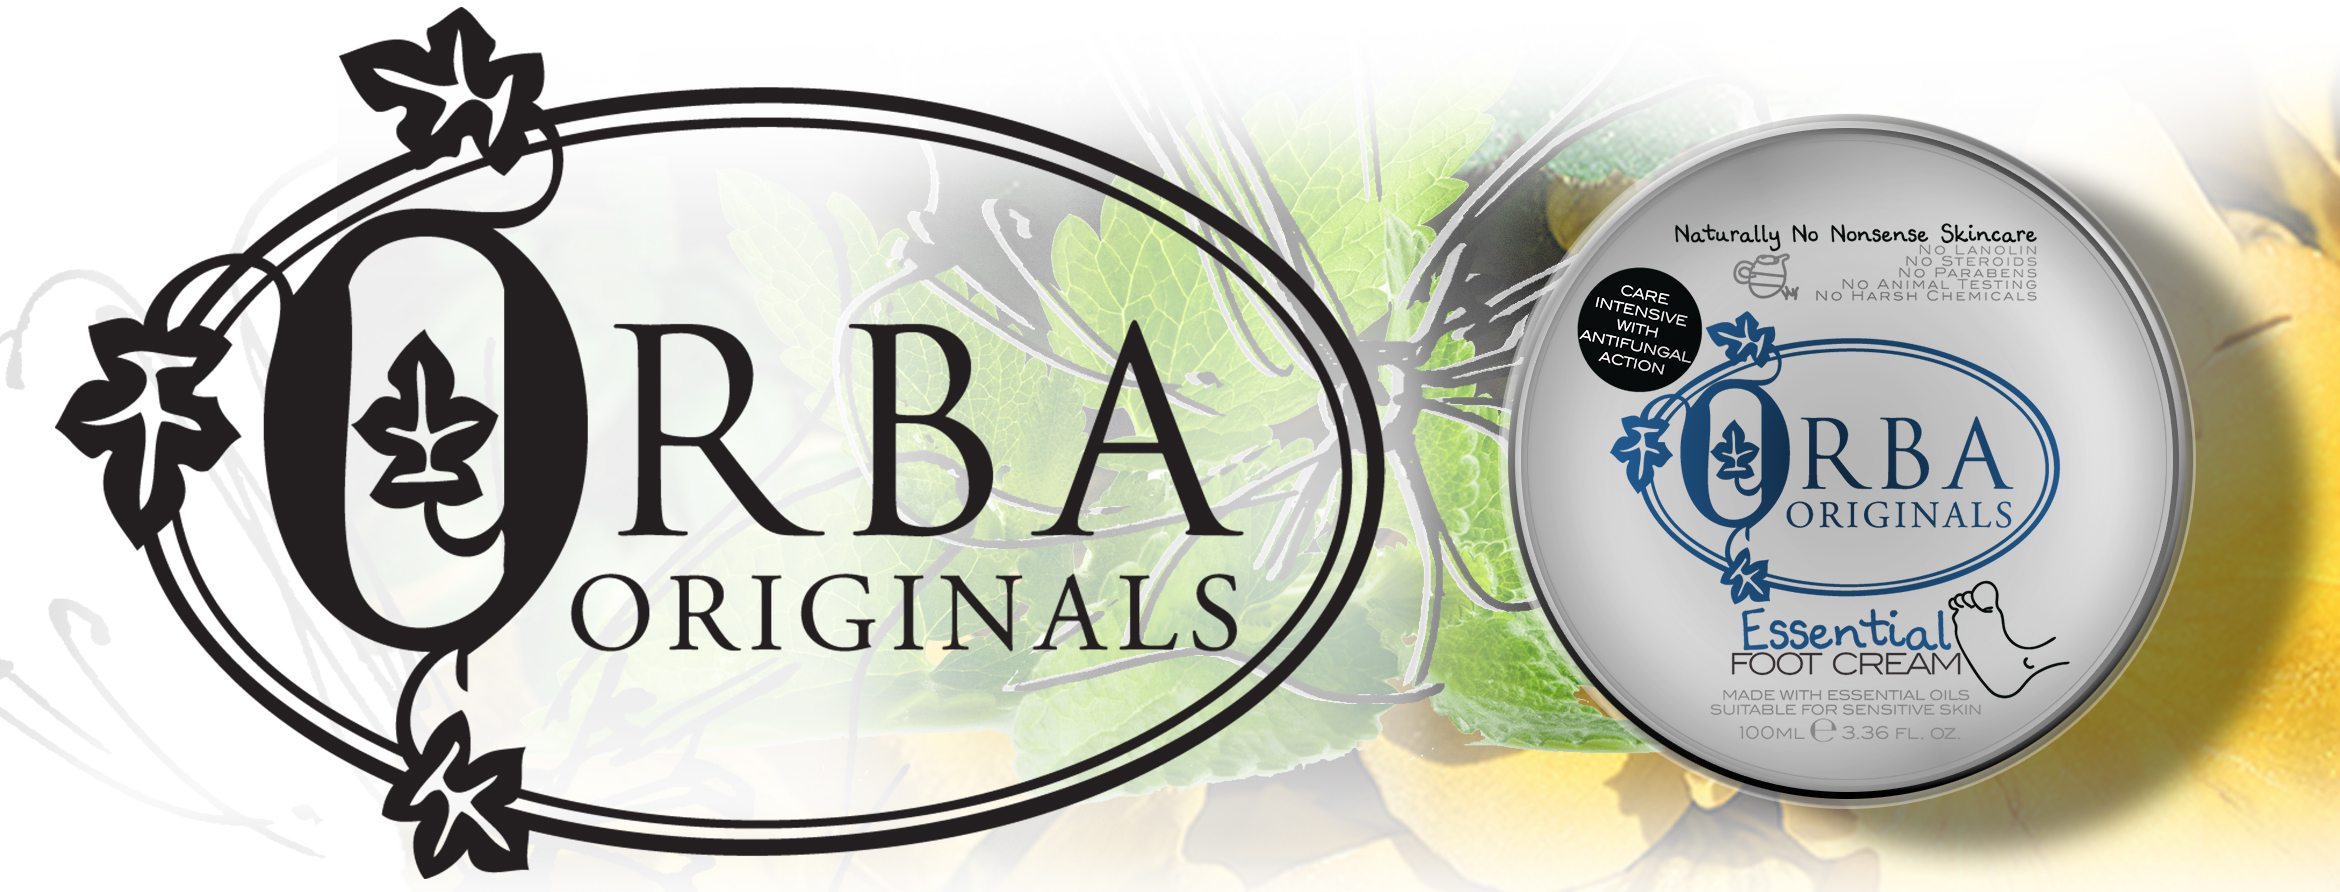 Orba Originals - Vitamin E Range